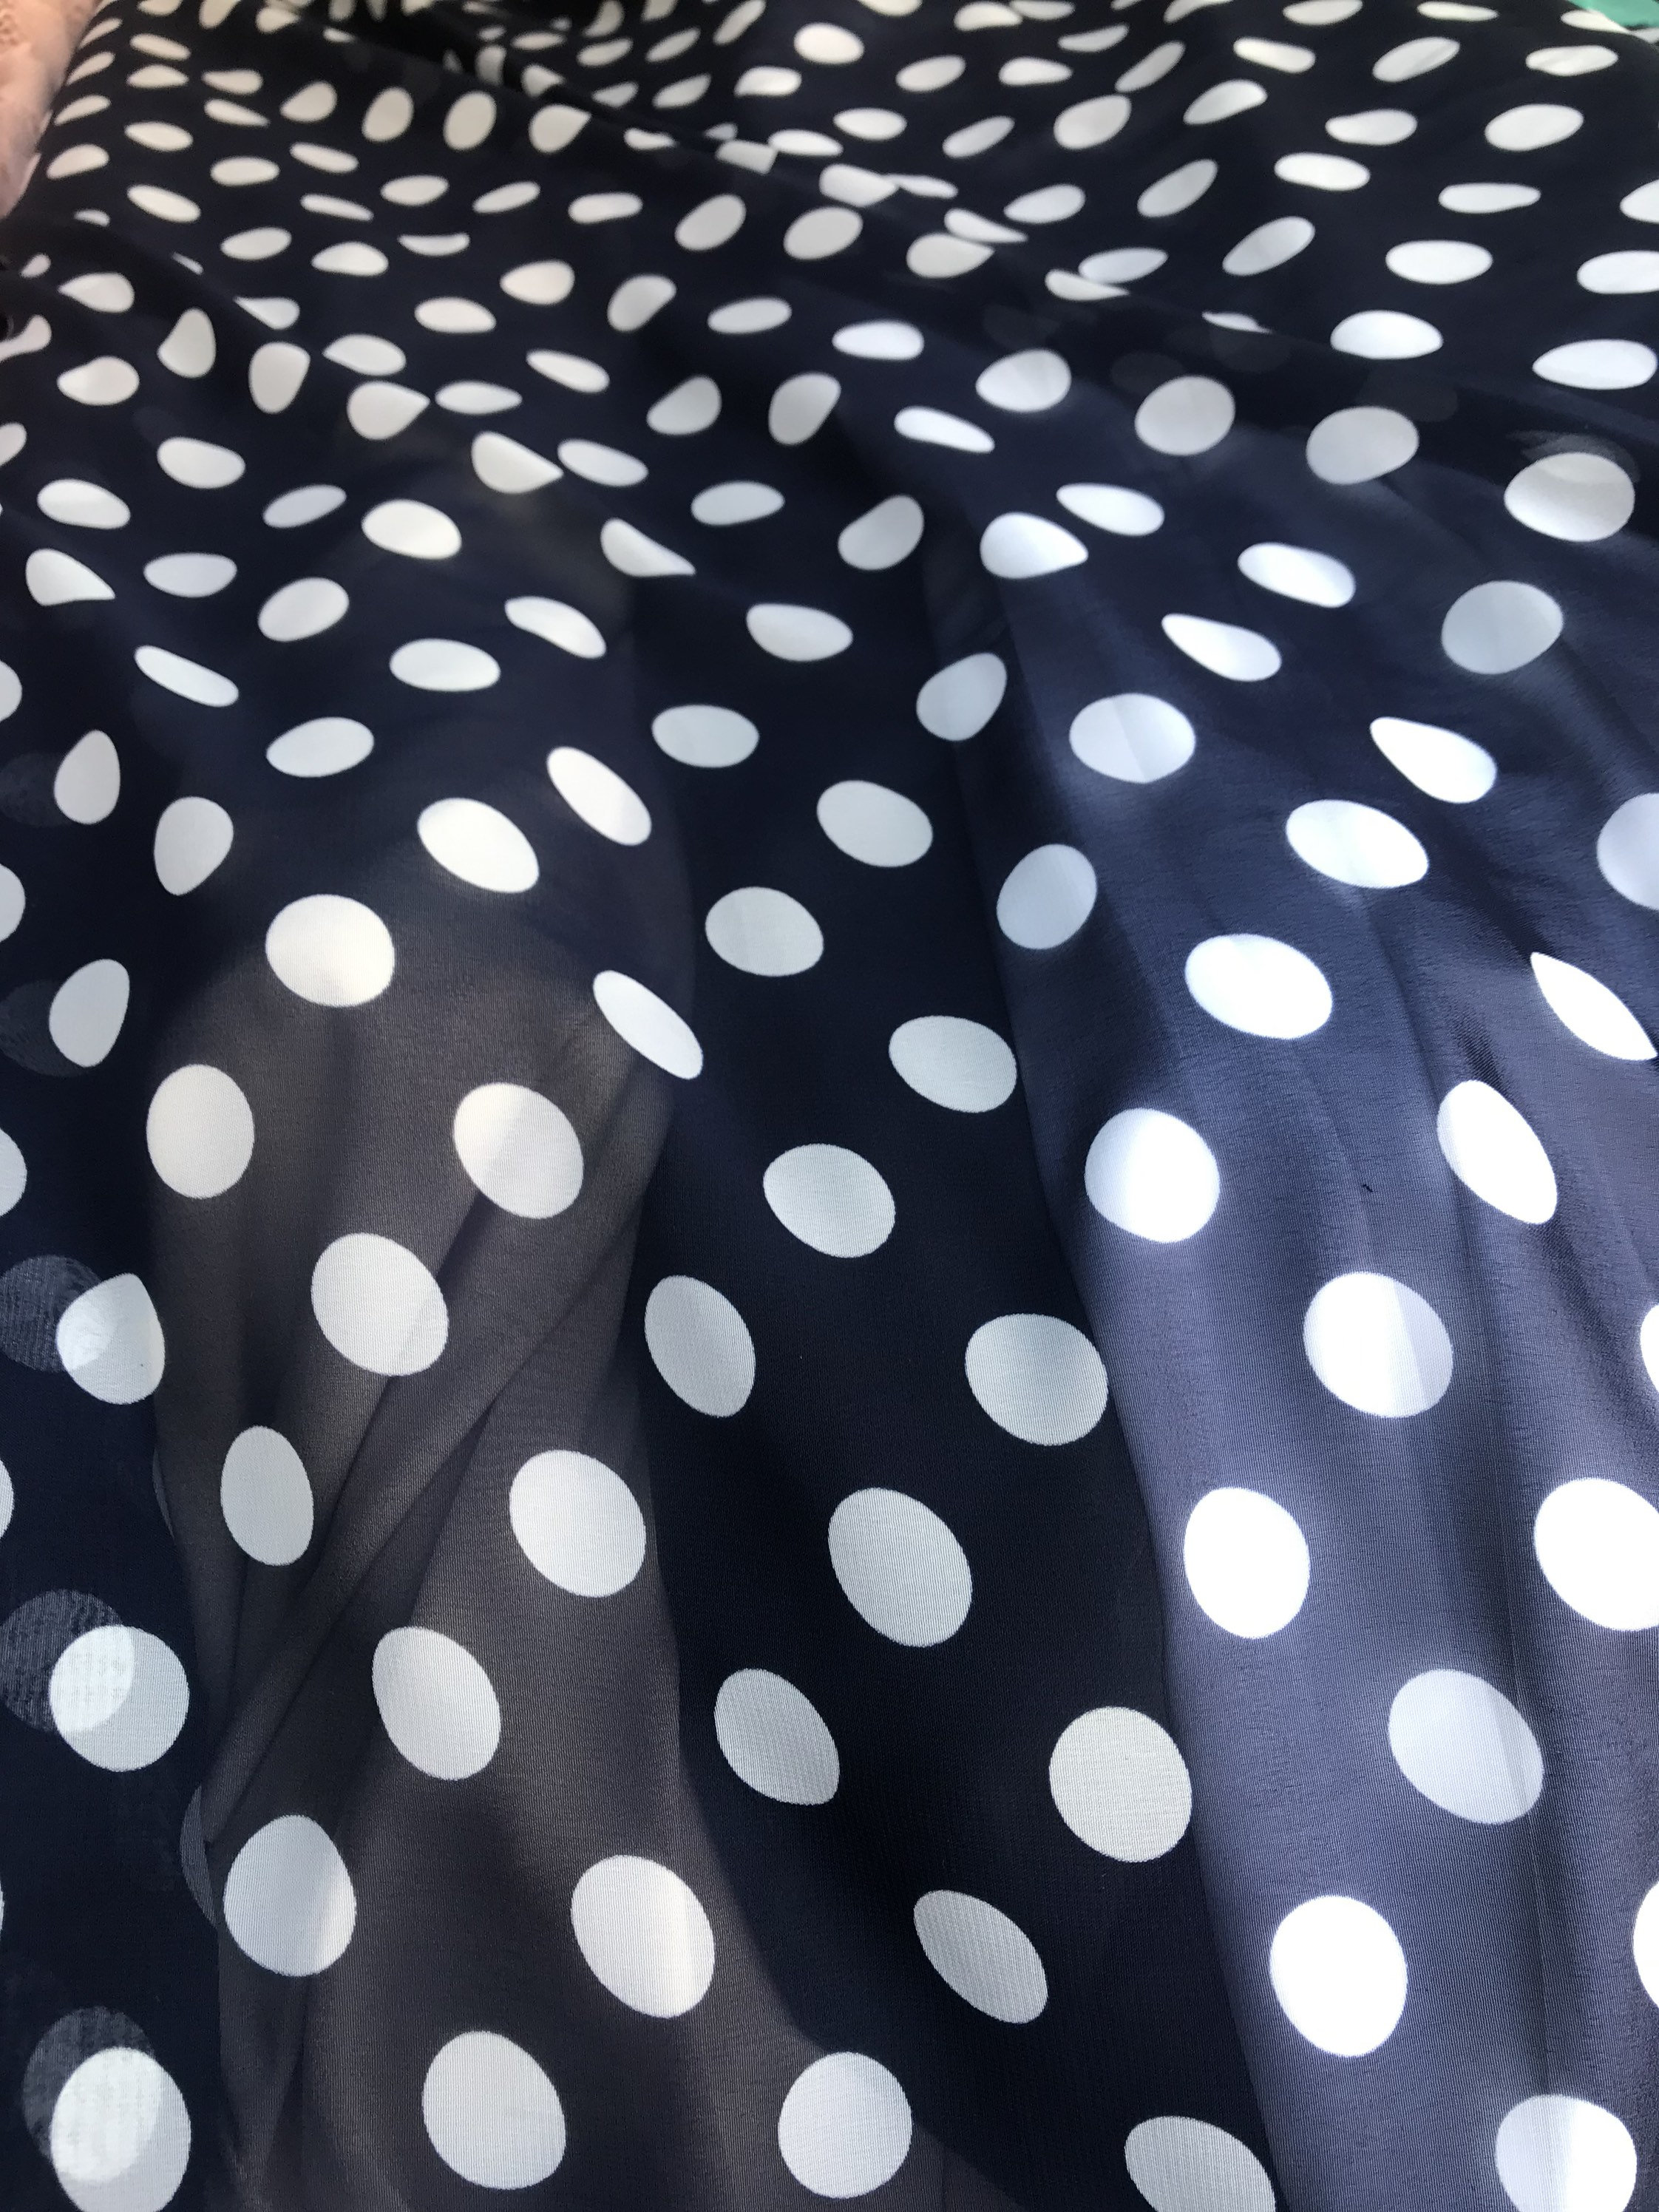 Polka Dot Sheer Chiffon Fabric by the yard / Chiffon Fabric by | Etsy